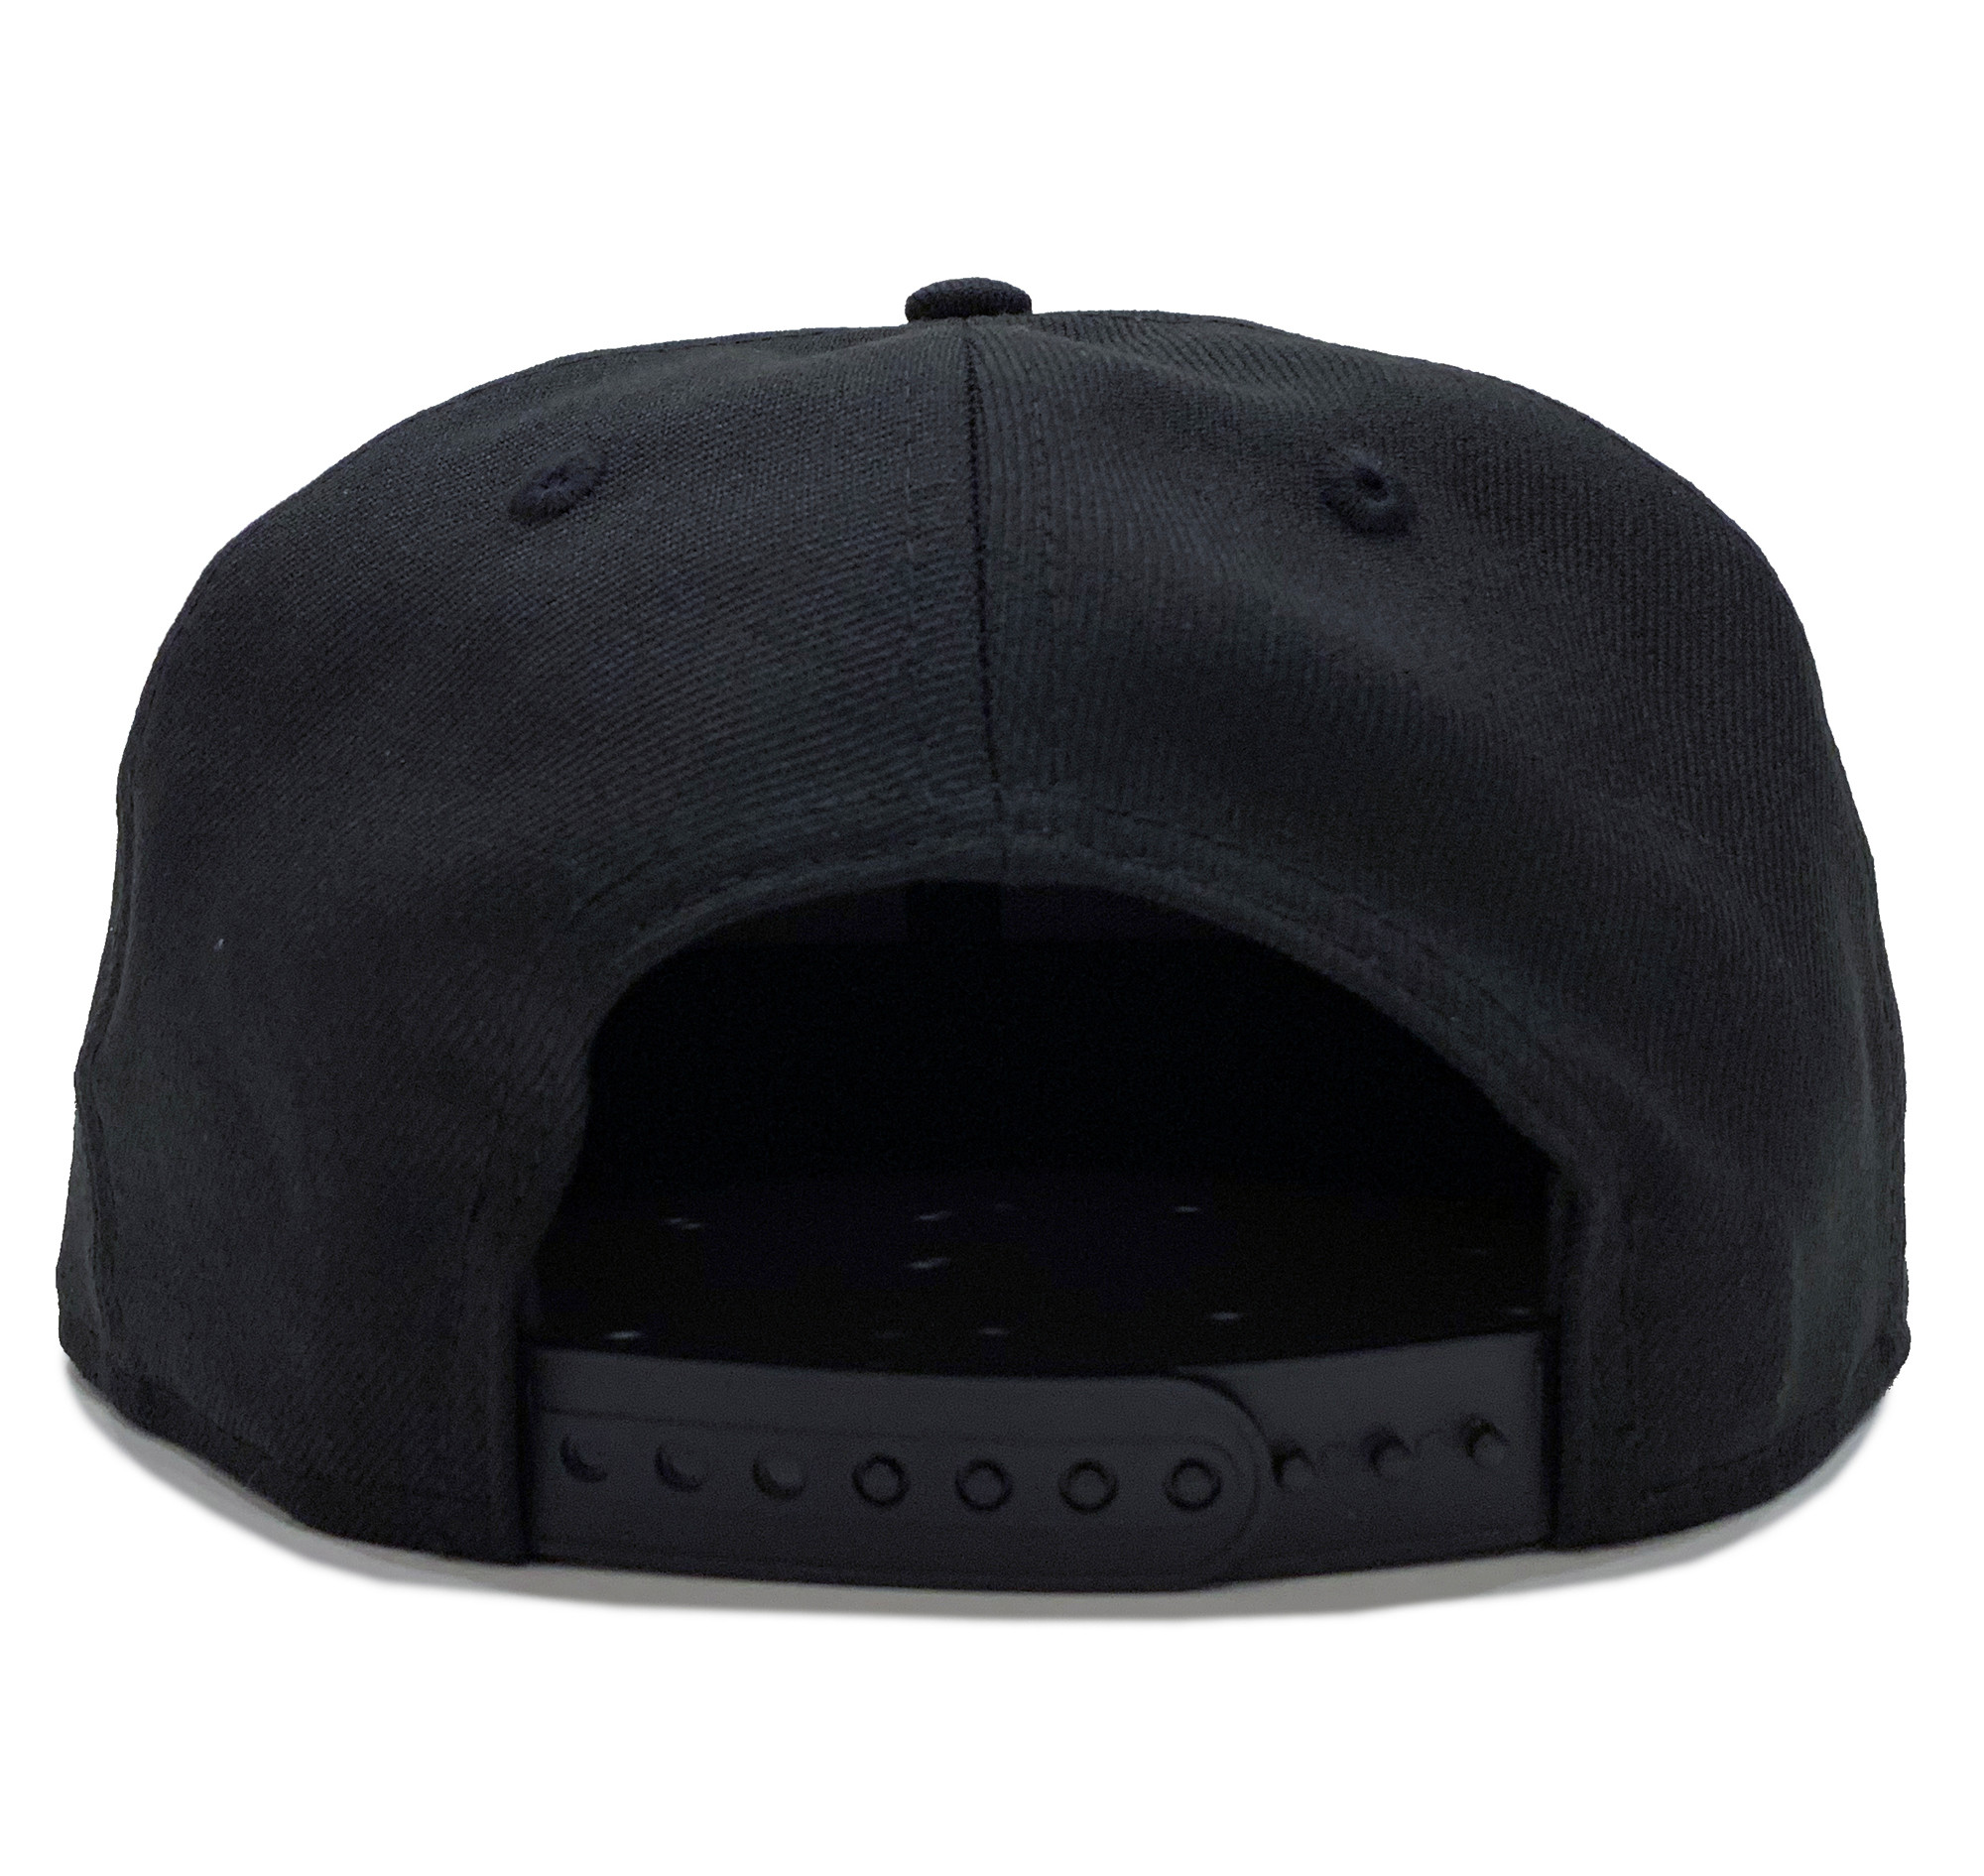 Logo New Era 9fifty Snapback Hat Black Black Eat Sleep Race Racing Lifestyle Apparel